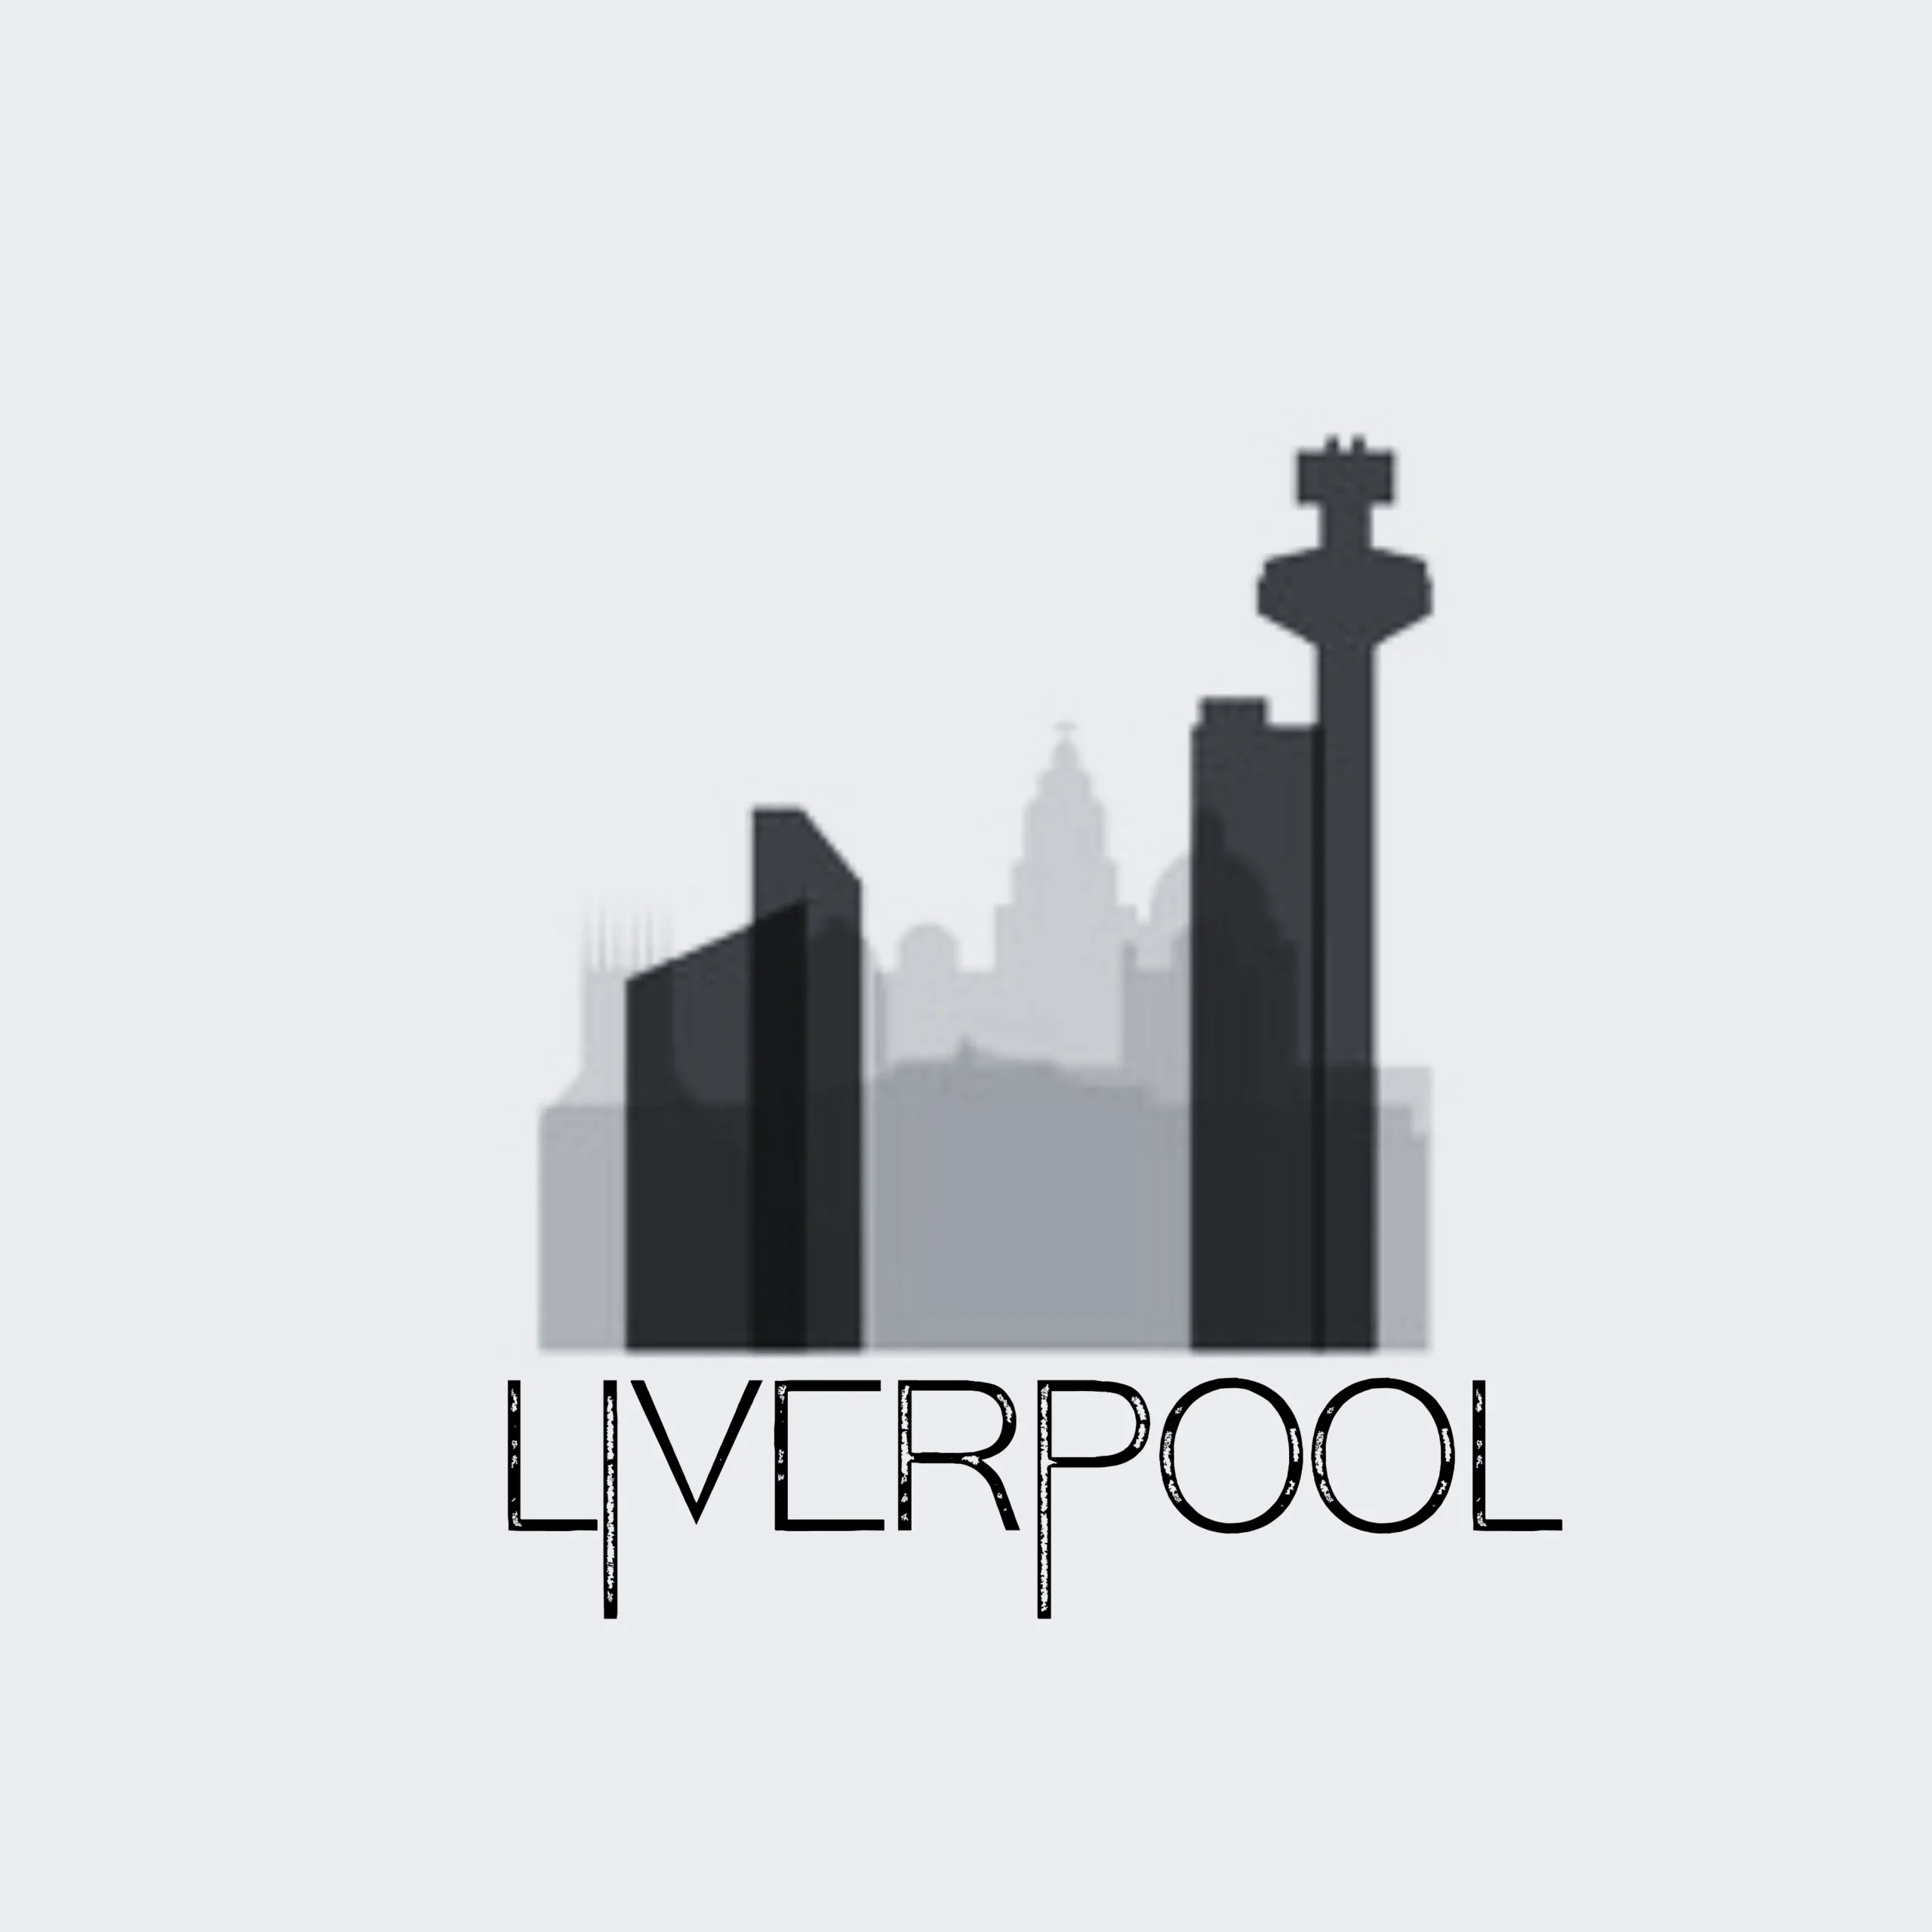 Liverpool city skyline